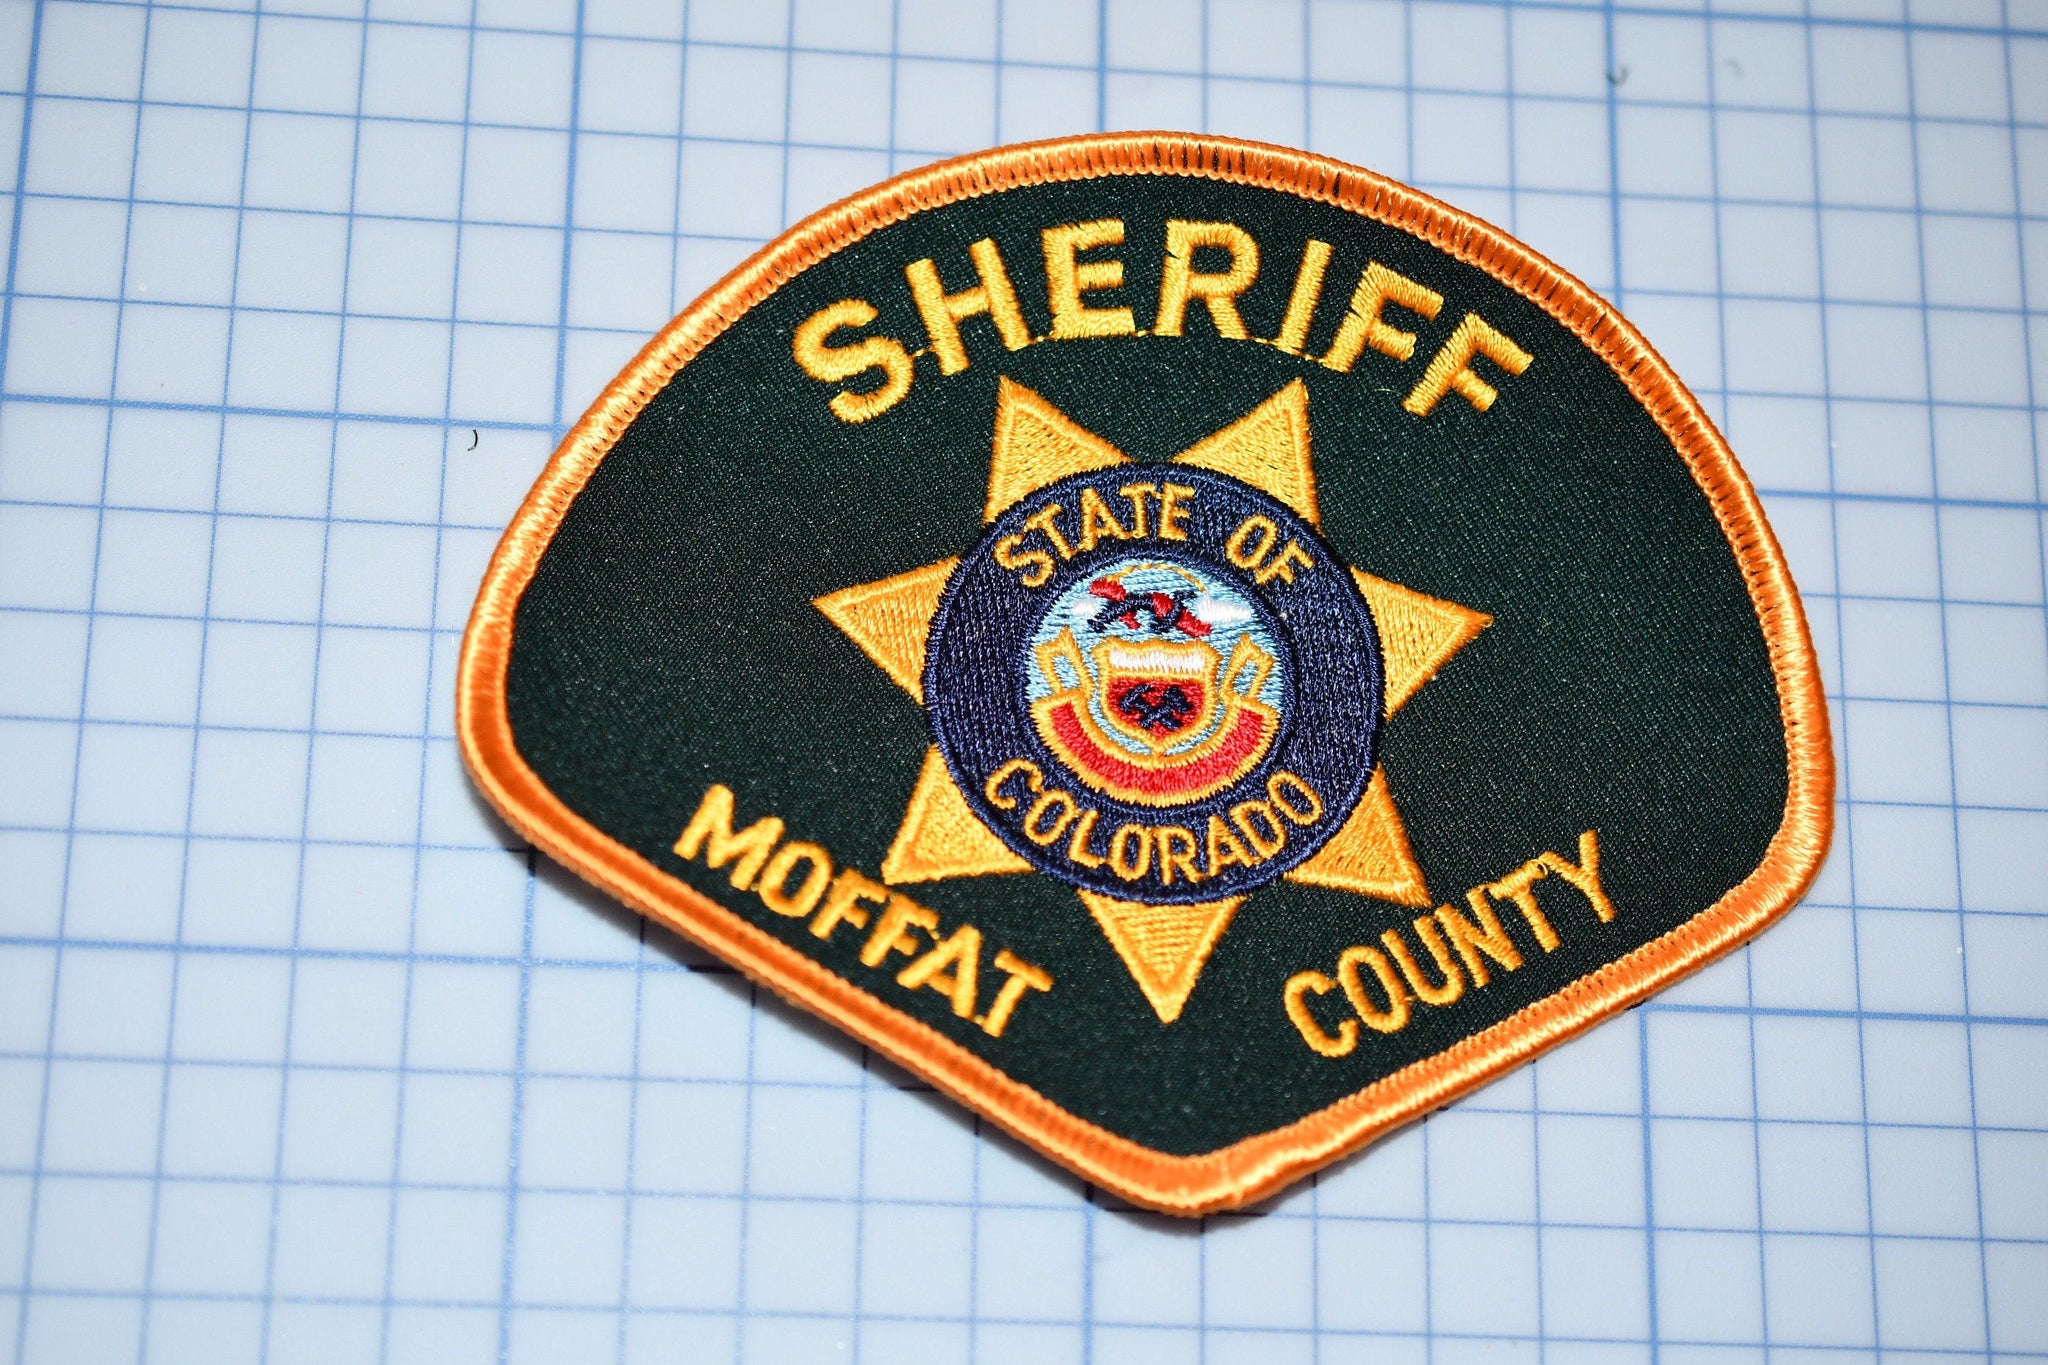 Moffat County Colorado Sheriff Patch (S3-274)